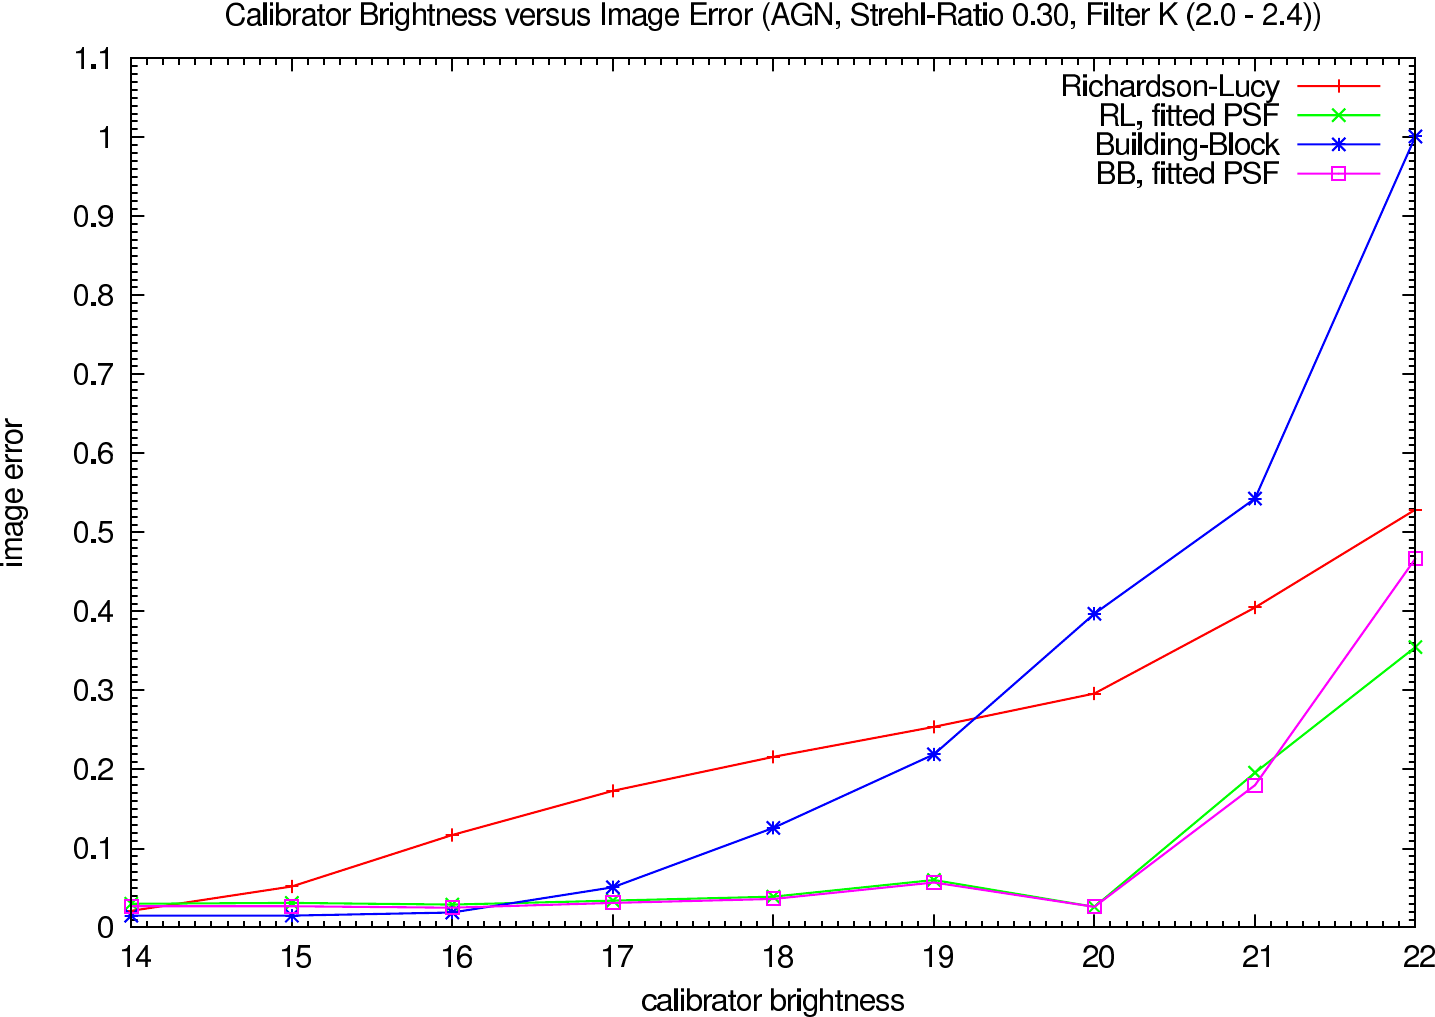 Image errors depending on the calibrator brightness, strehl ratio 0.30, K-Band